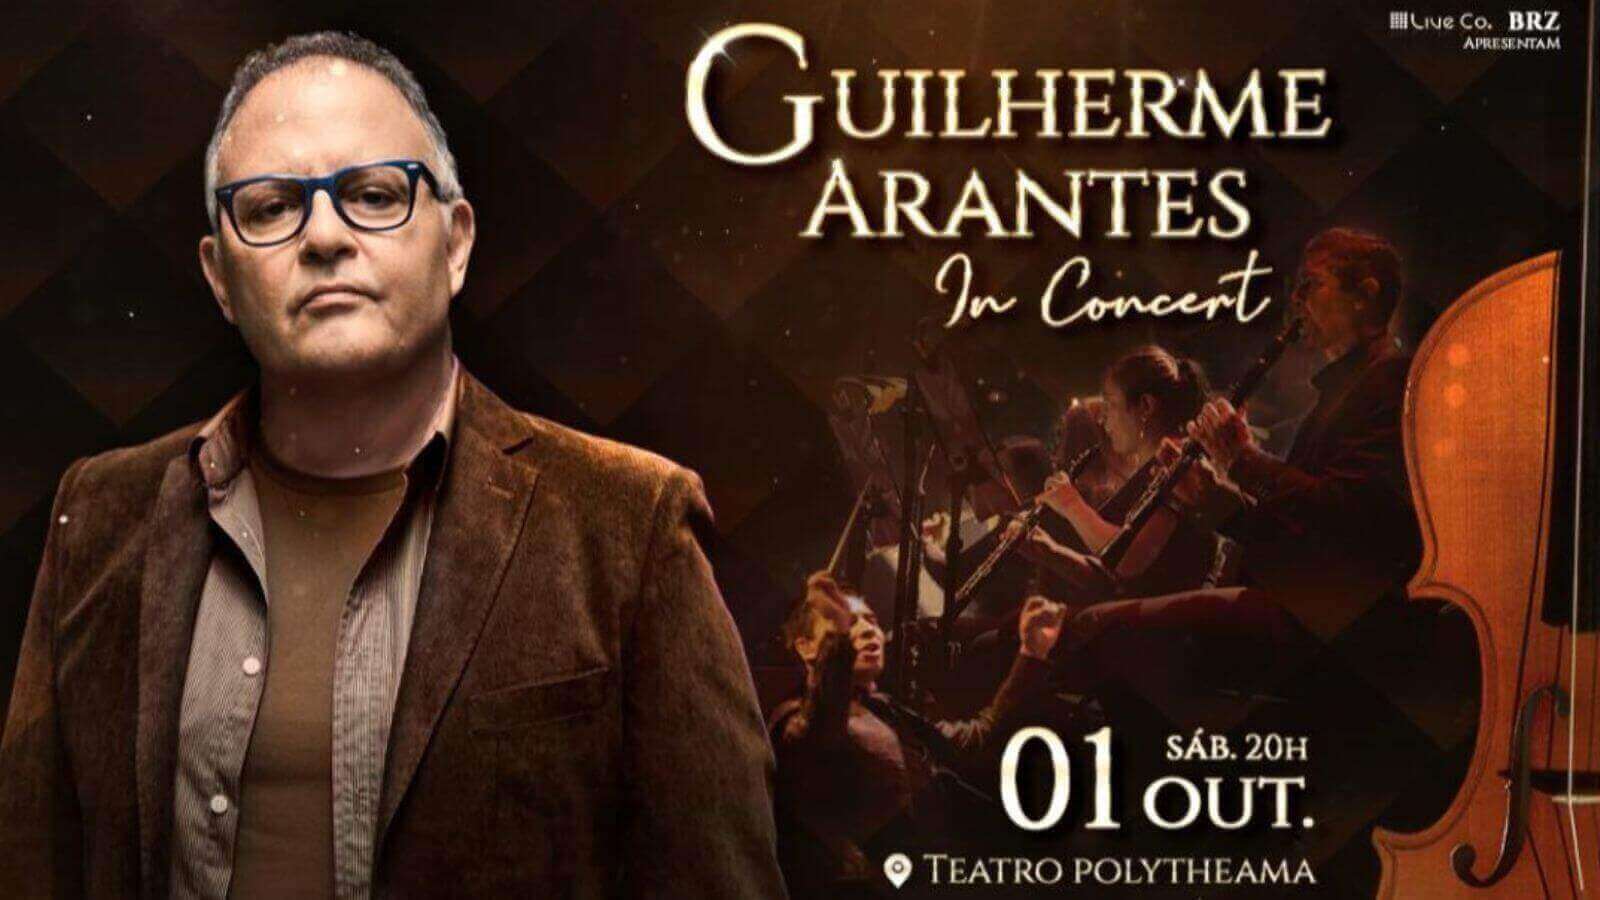 Guilherme Arantes In Concert